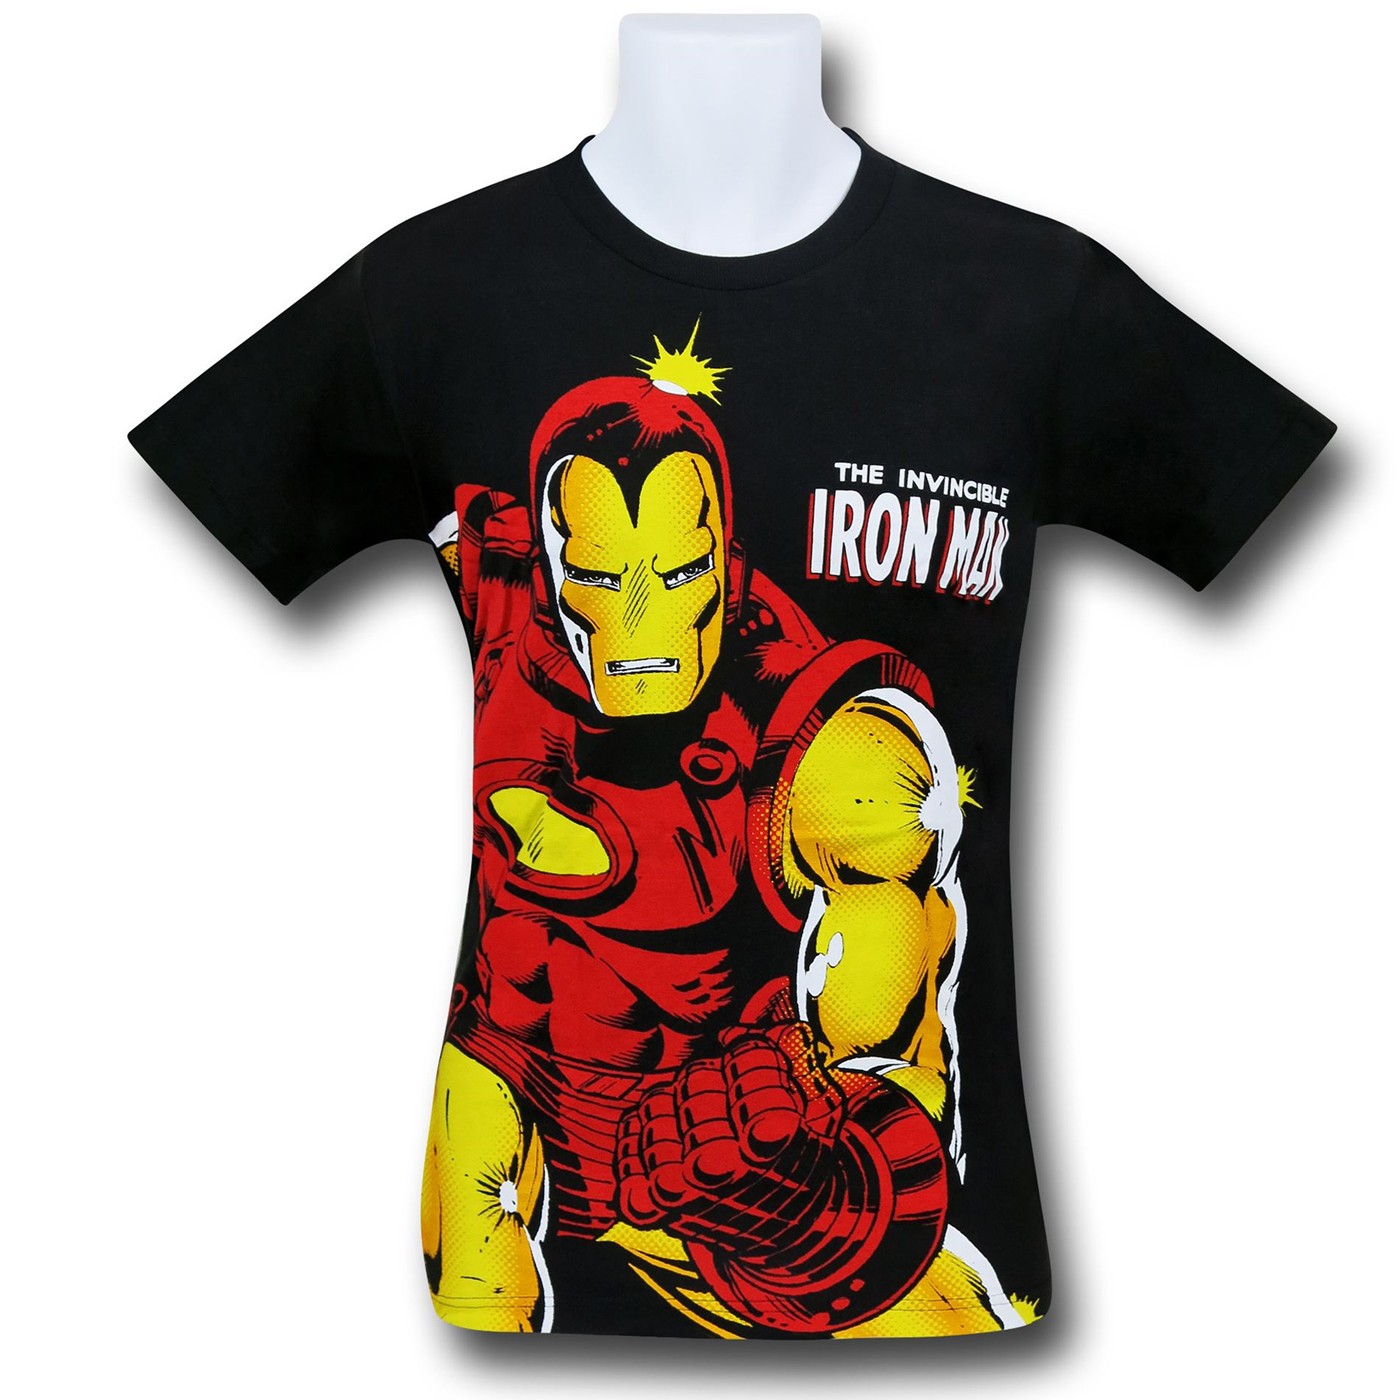 Iron Man Invincible Big Image 30 Single T-Shirt